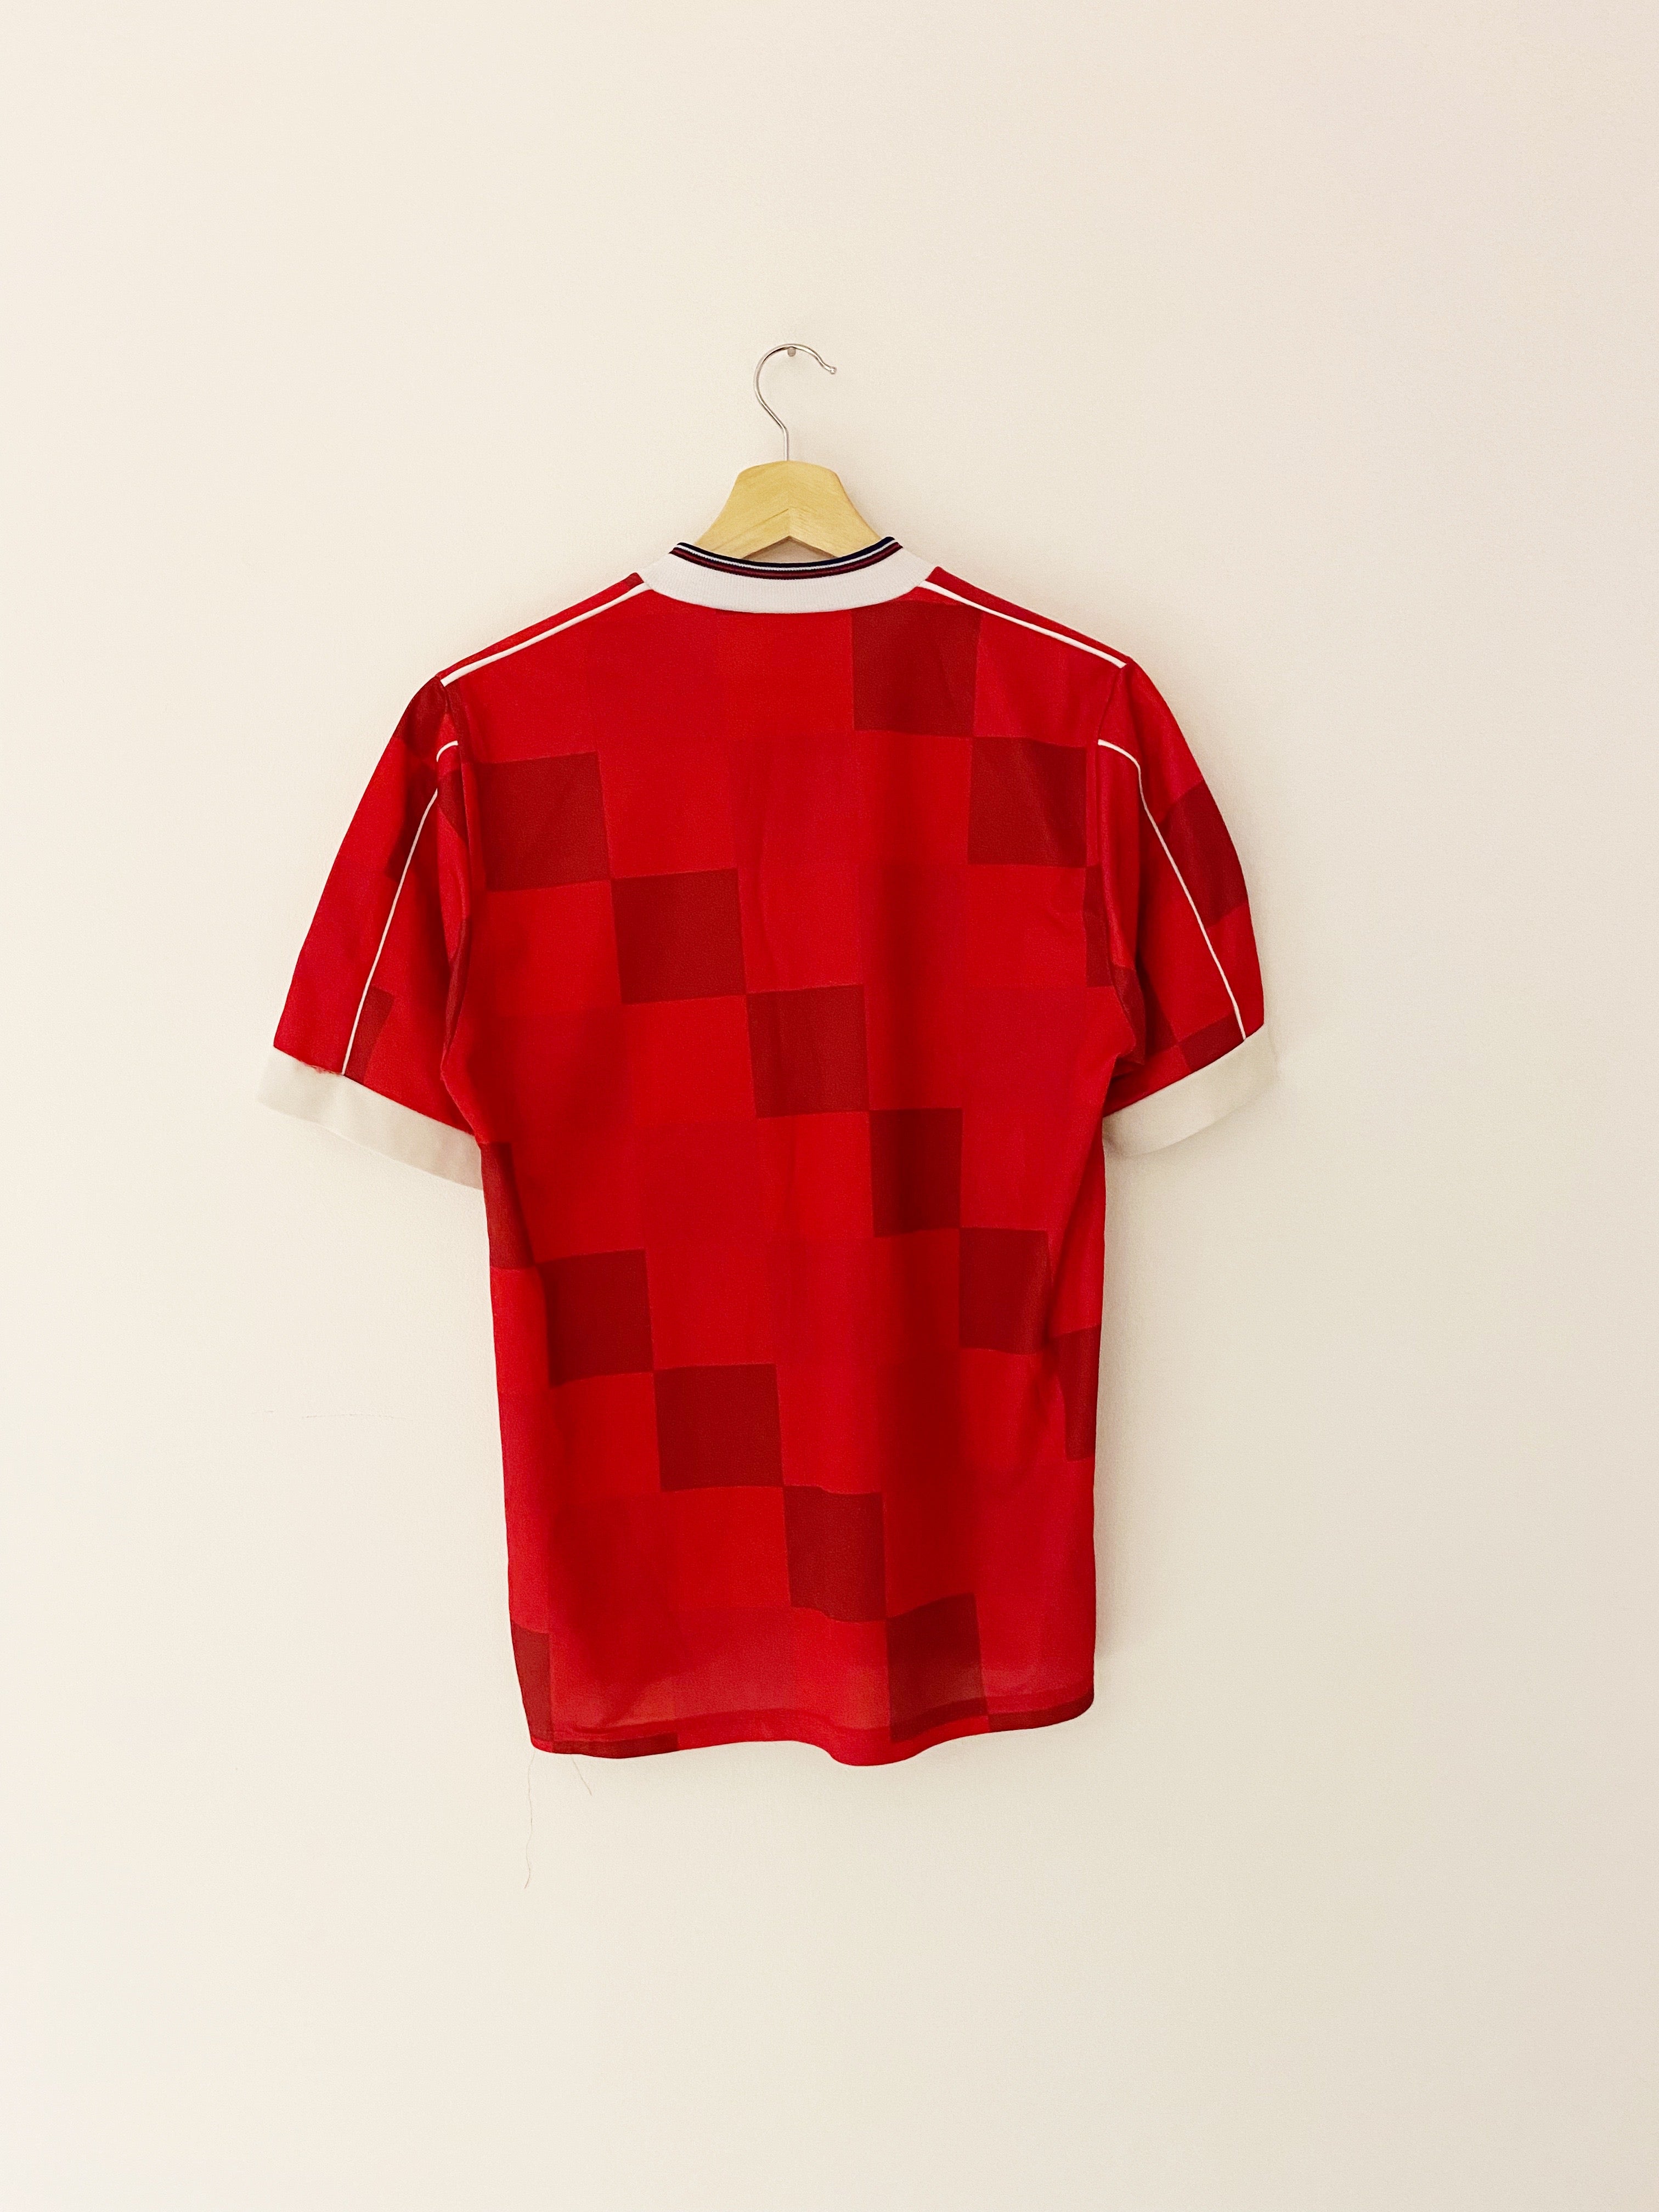 1987/90 Camiseta local del Aberdeen (S) 8/10 